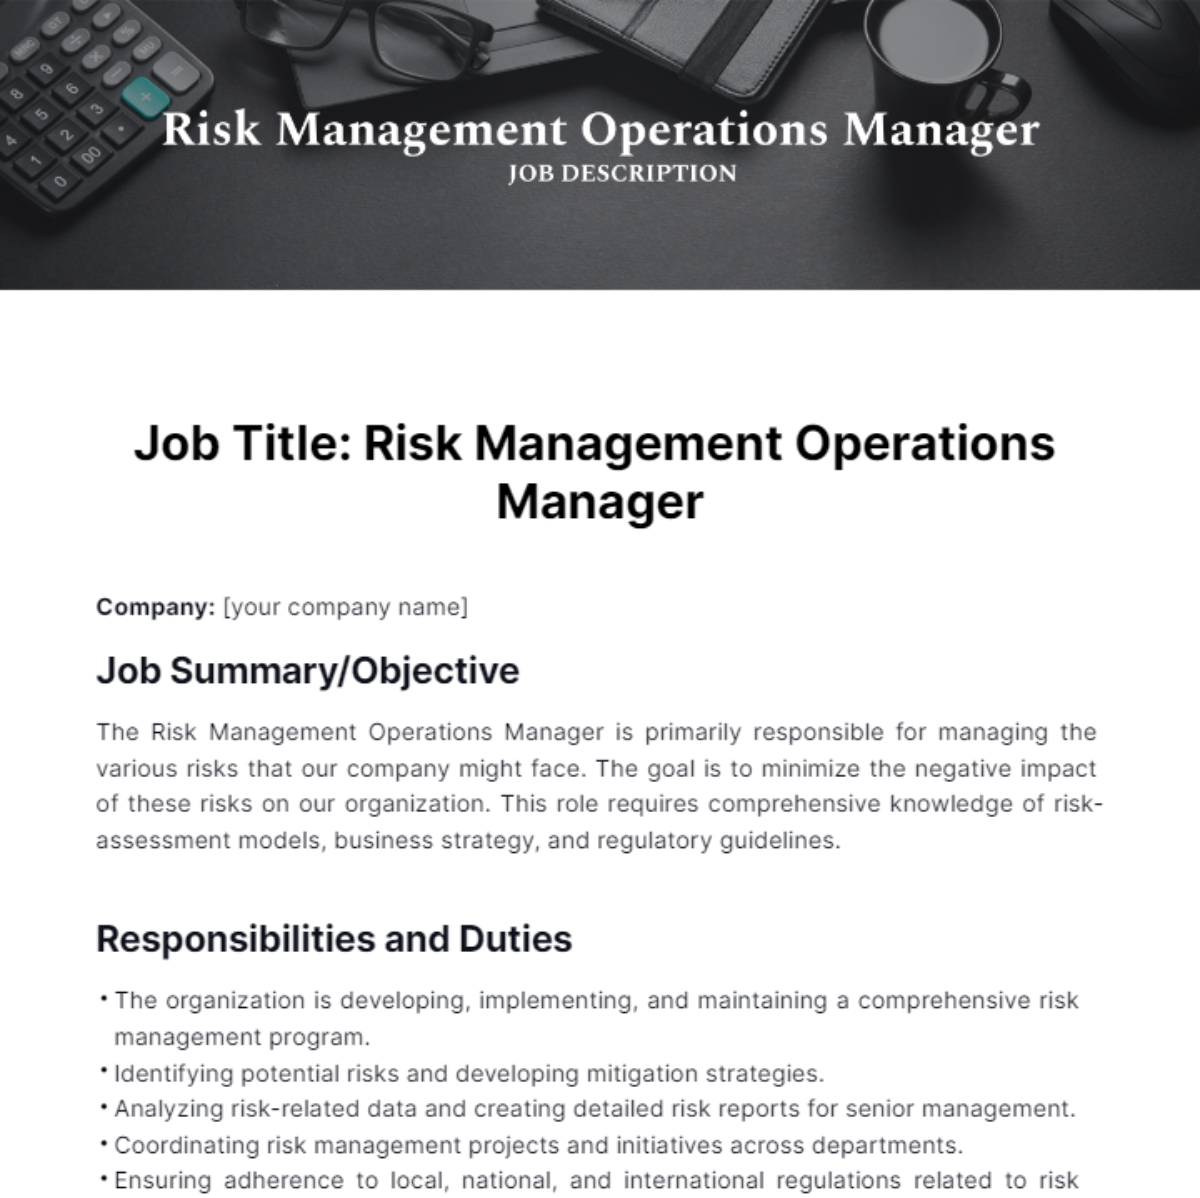 Risk Management Operations Manager Job Description Template